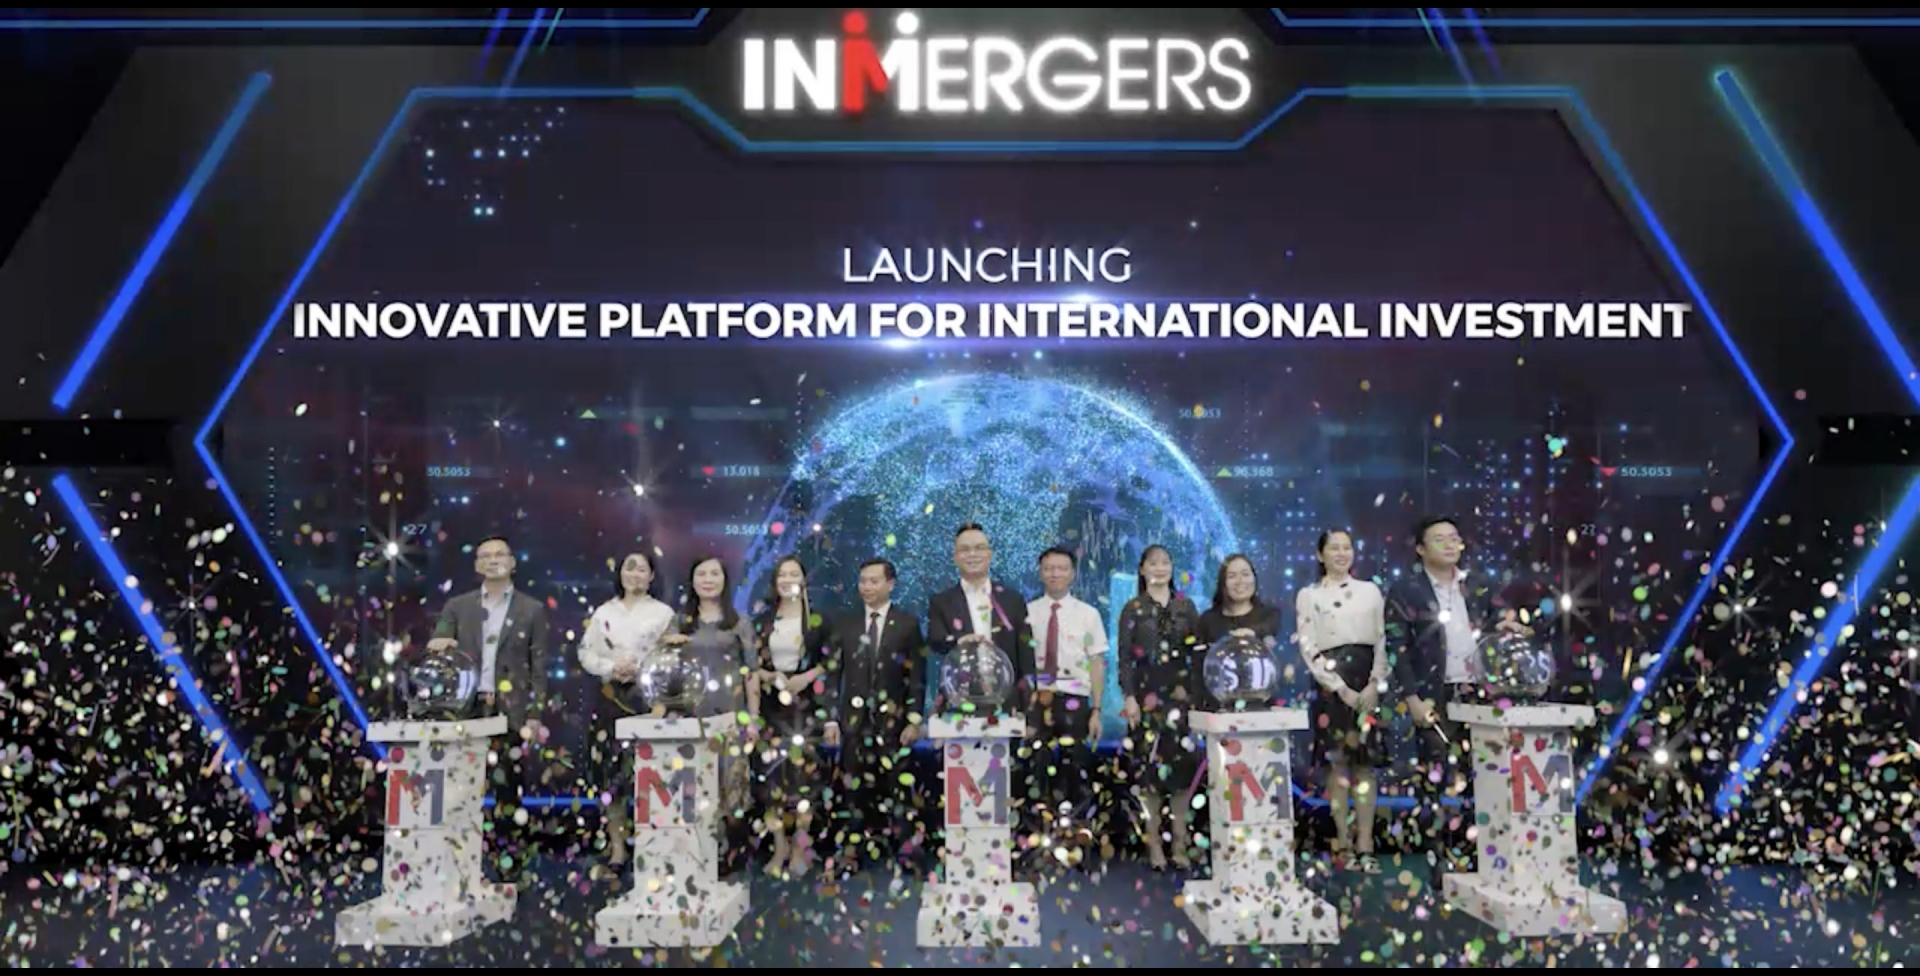 INMERGERS debuts as digital platform for M&A